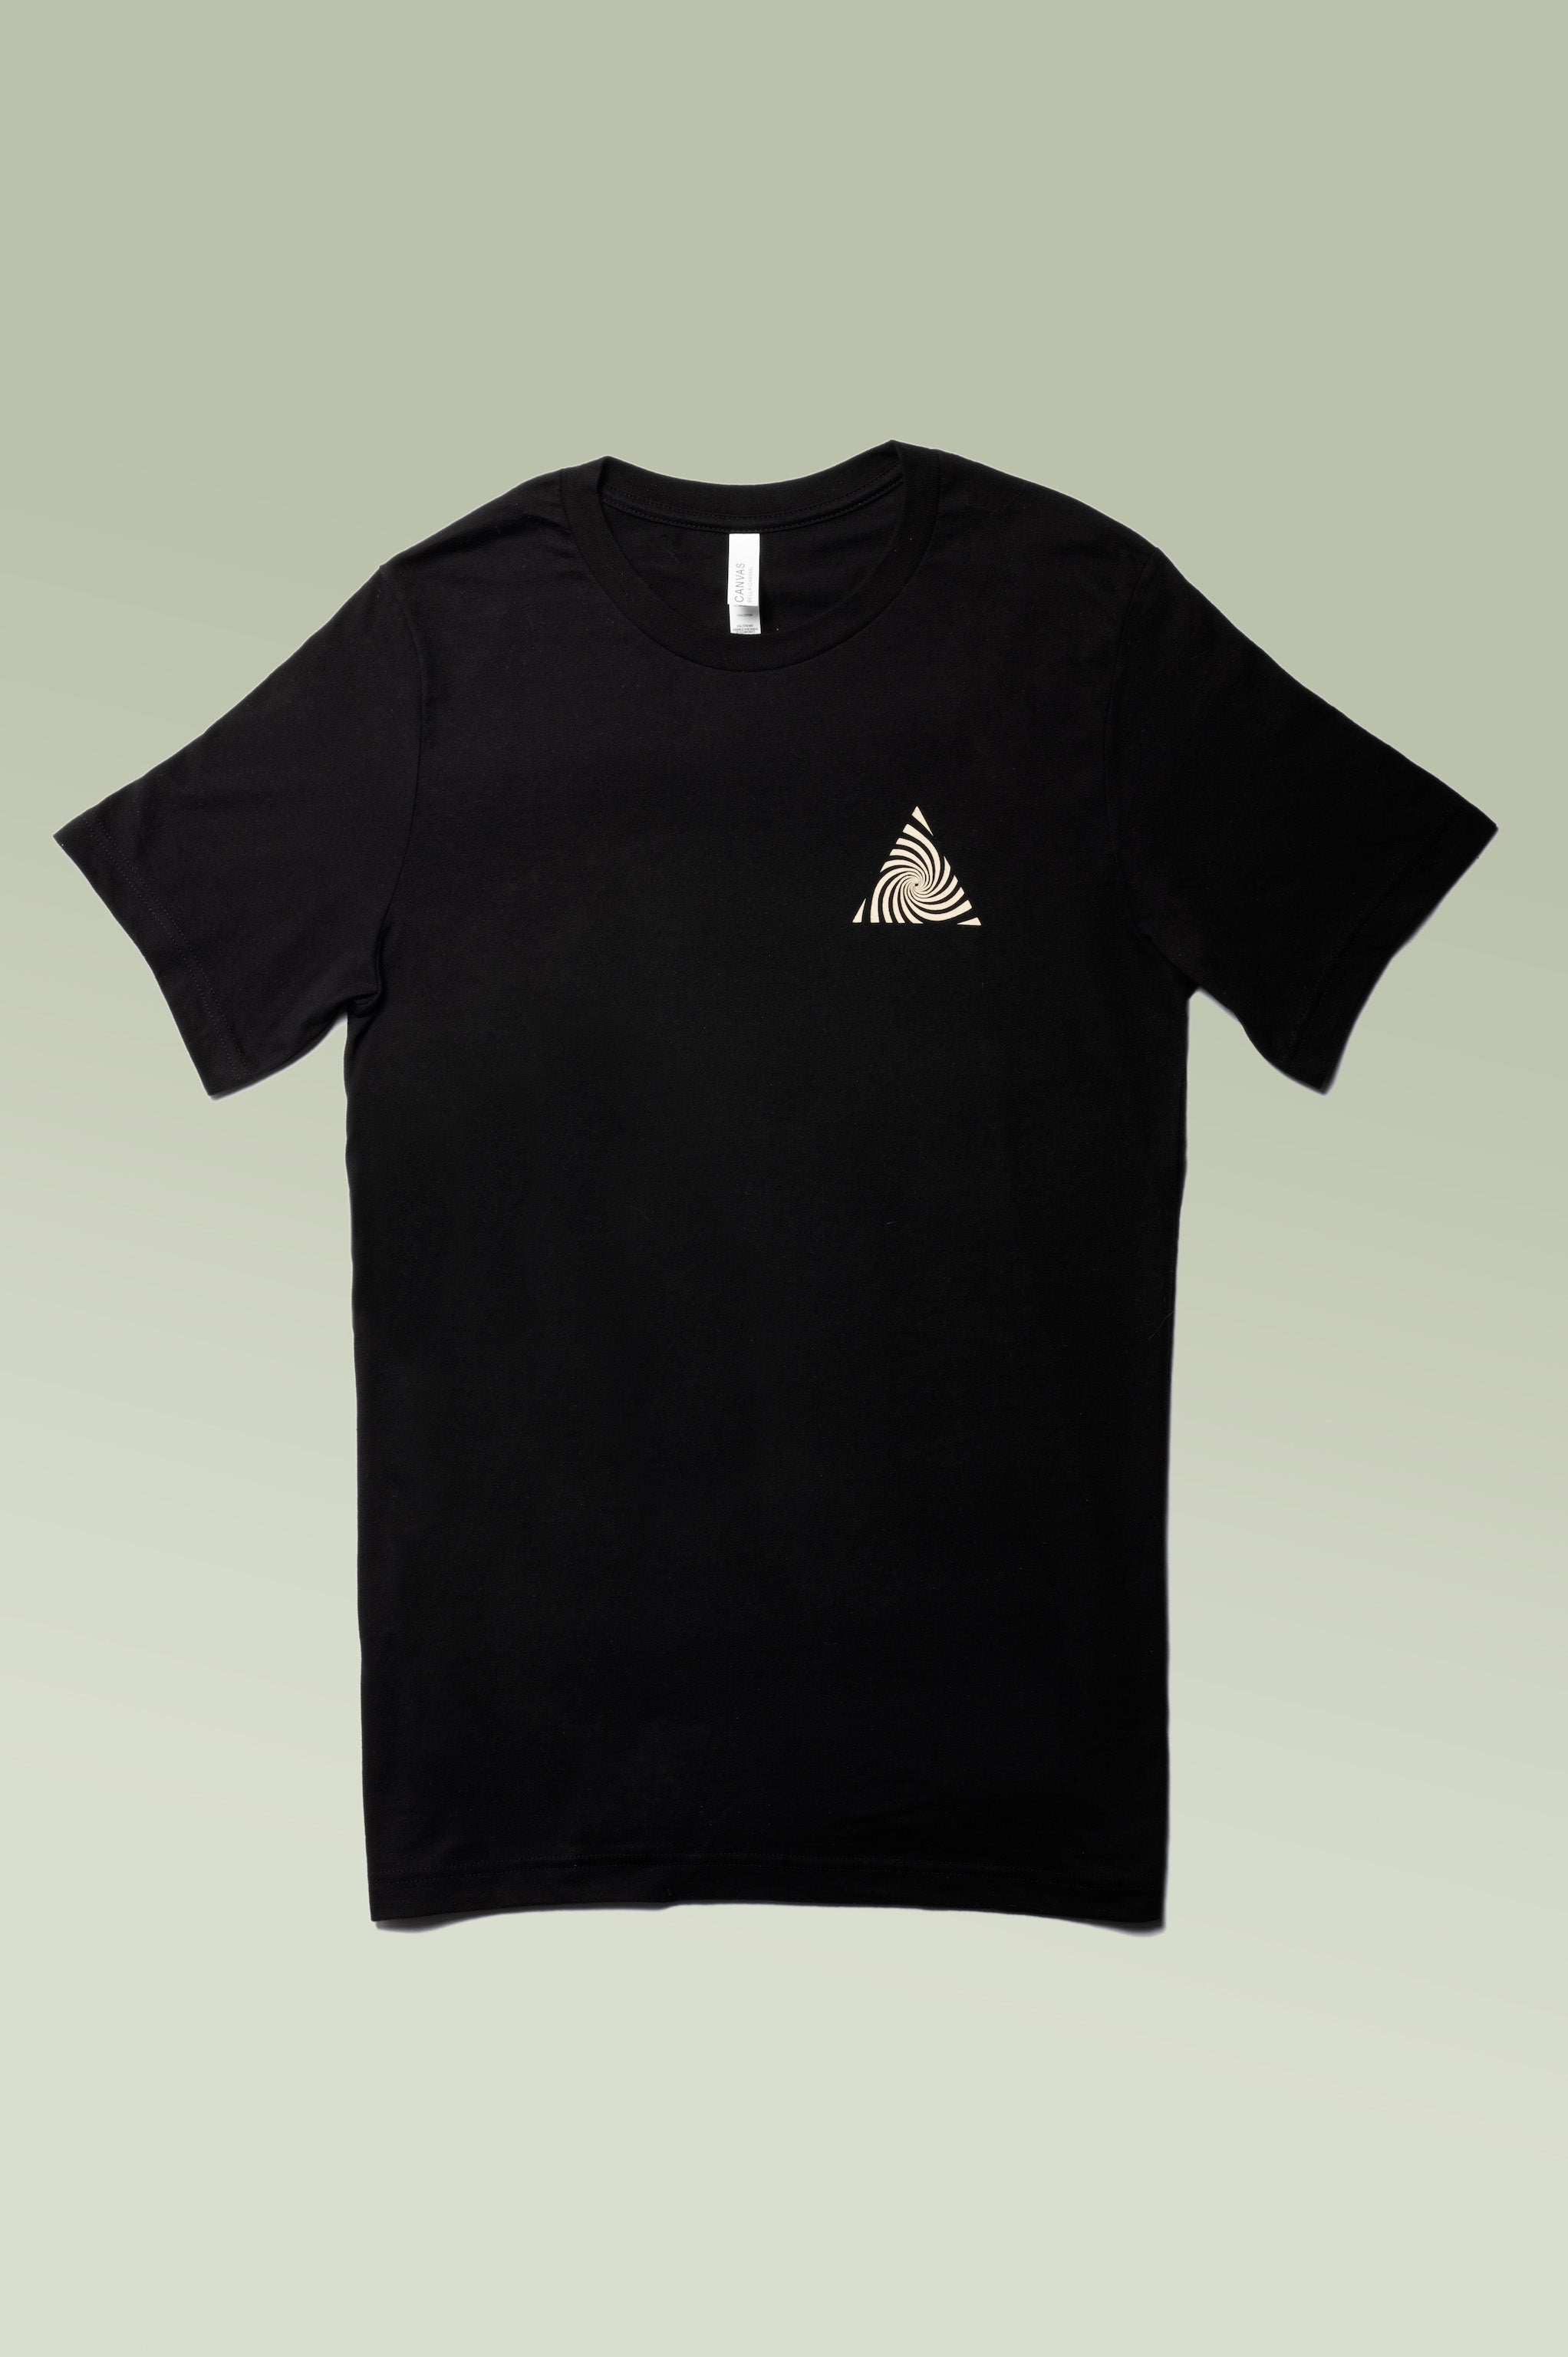 Prisma T-shirt Black